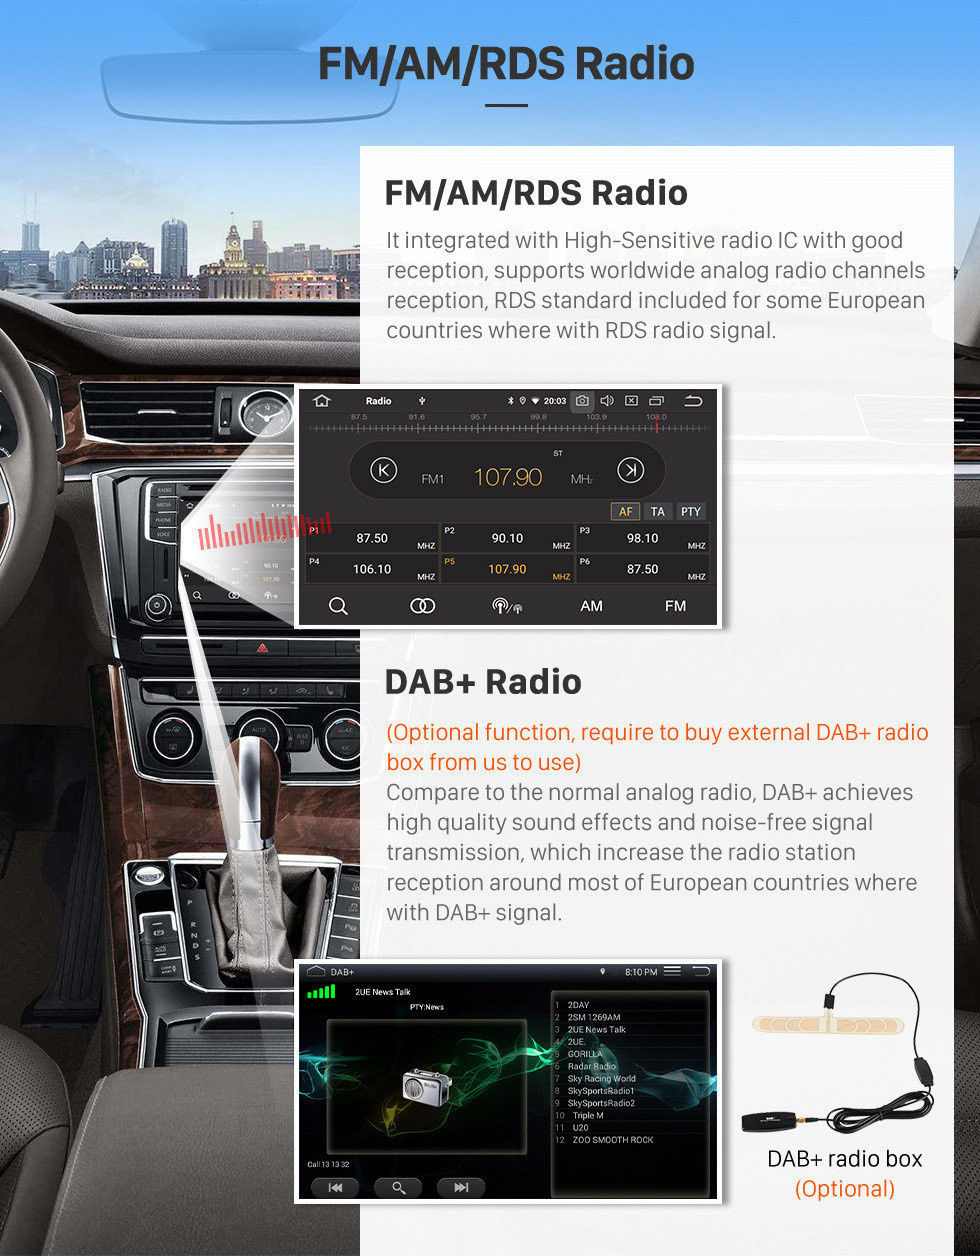 Seicane 10,1 Zoll Aftermarket Android 13.0 Radio GPS Navigationssystem für 2012-2015 VW Volkswagen MAGOTAN 1024 * 600 Touchscreen TPMS DVR OBD II Lenkradsteuerung USB Bluetooth WiFi Video AUX